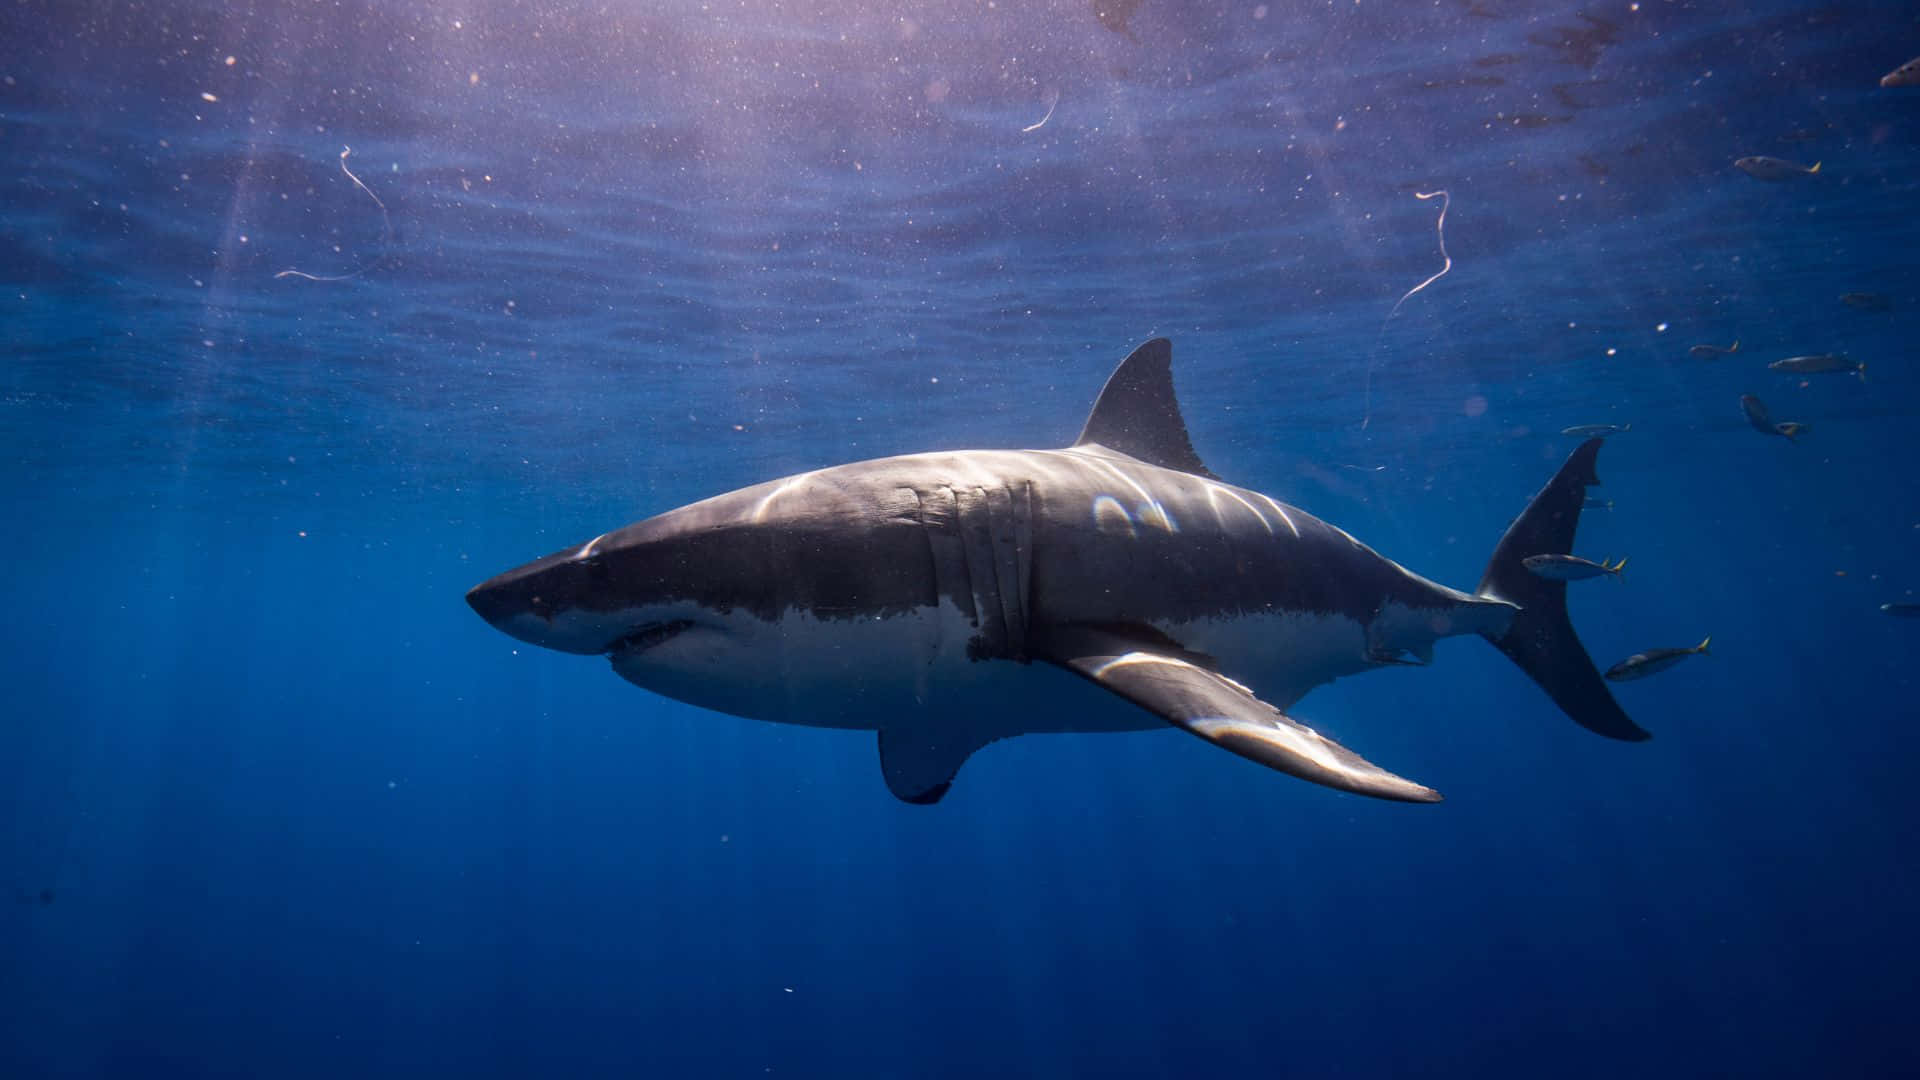 Big Scary Black Shark Background